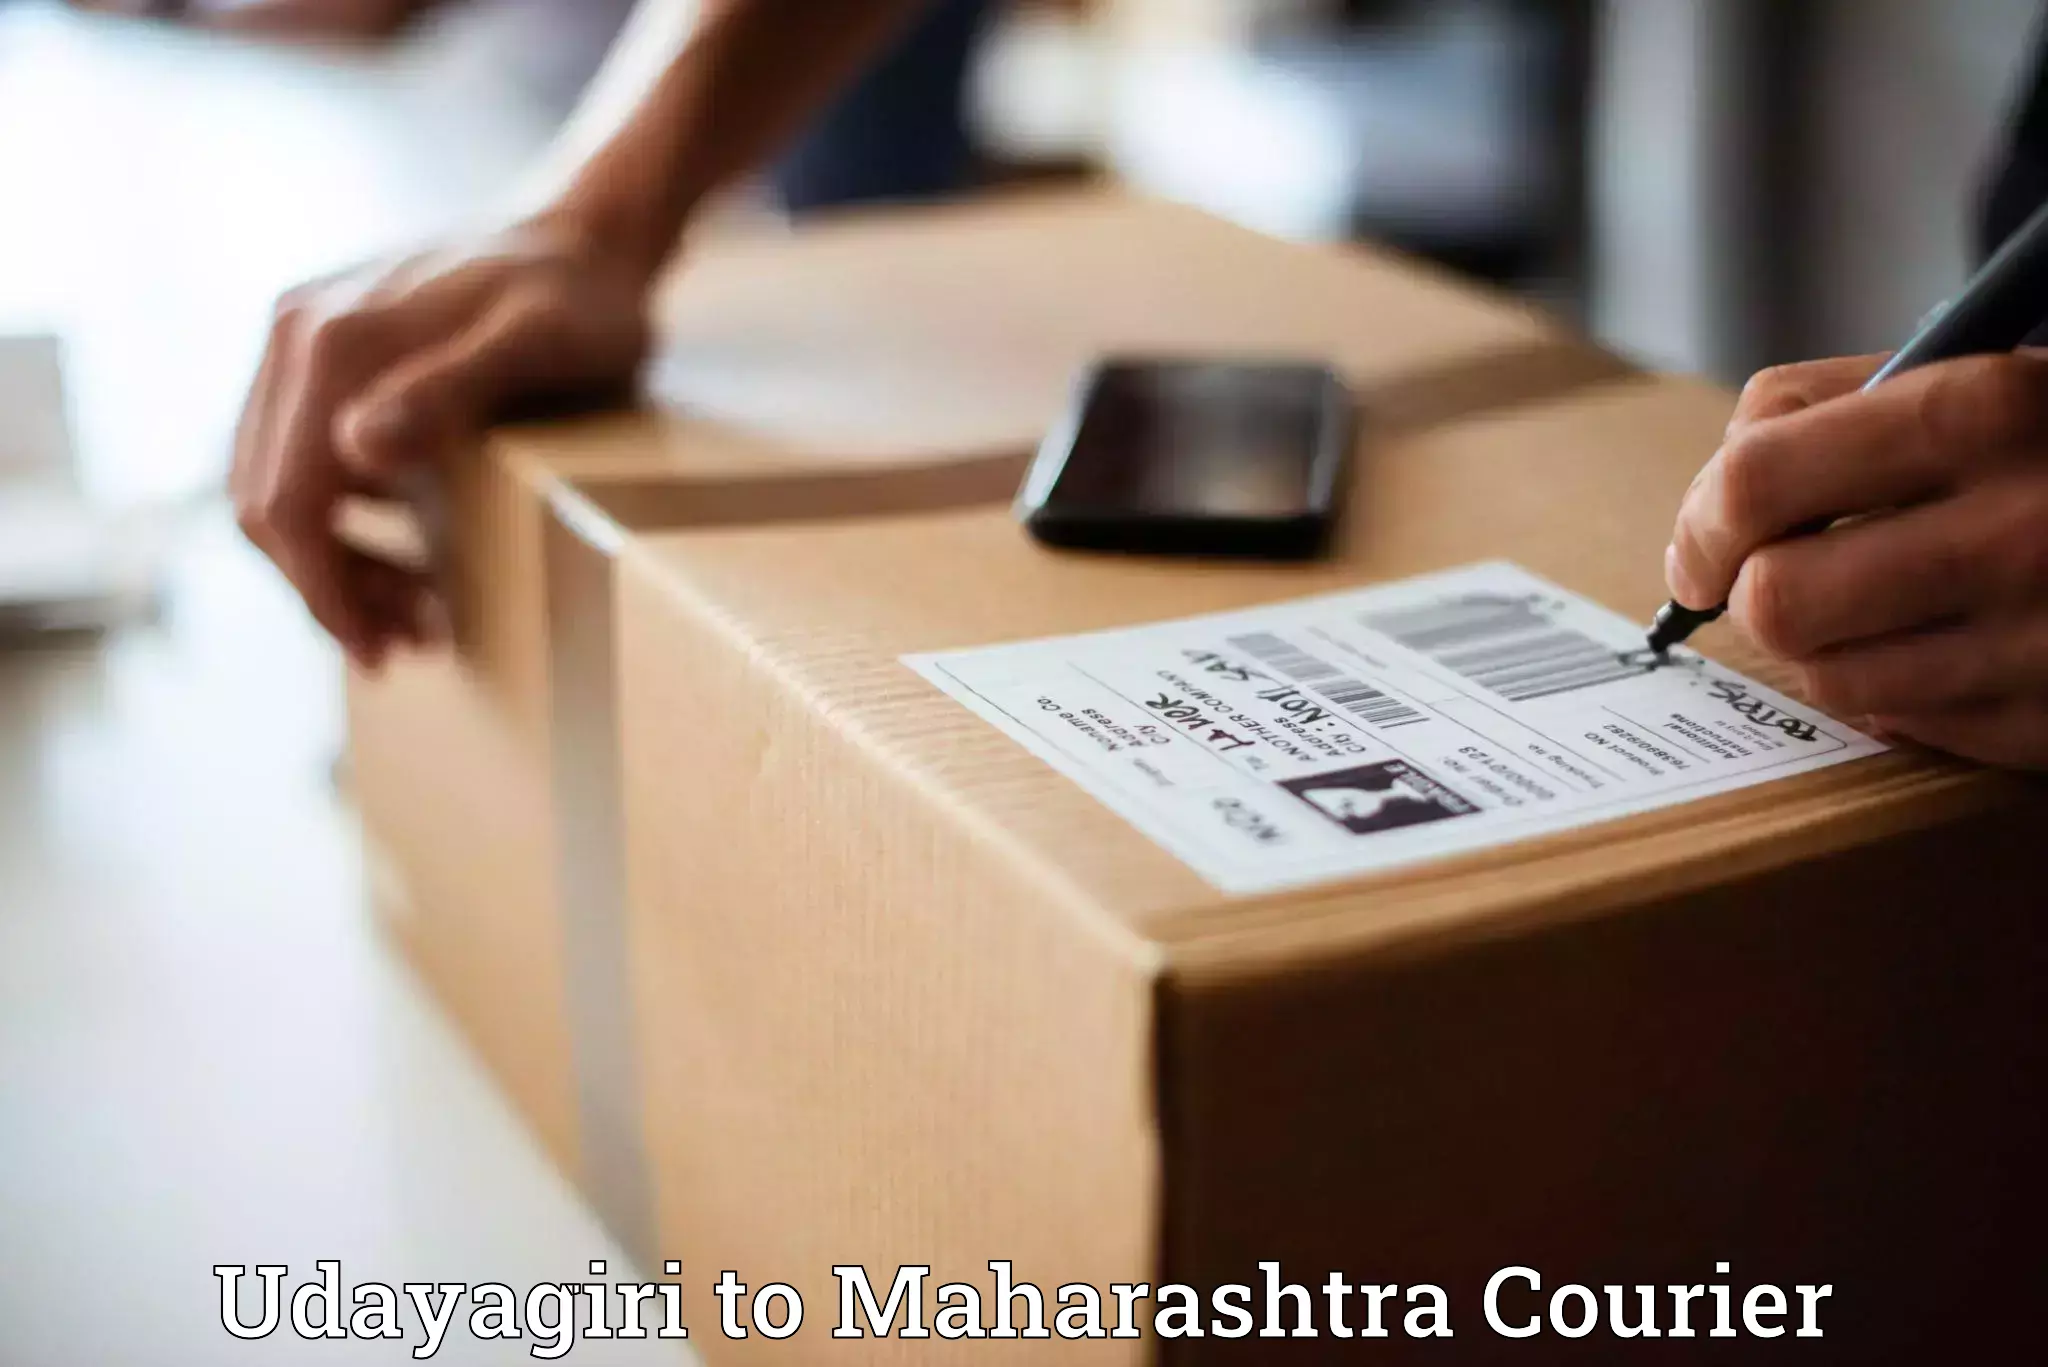 Efficient shipping operations Udayagiri to Solapur